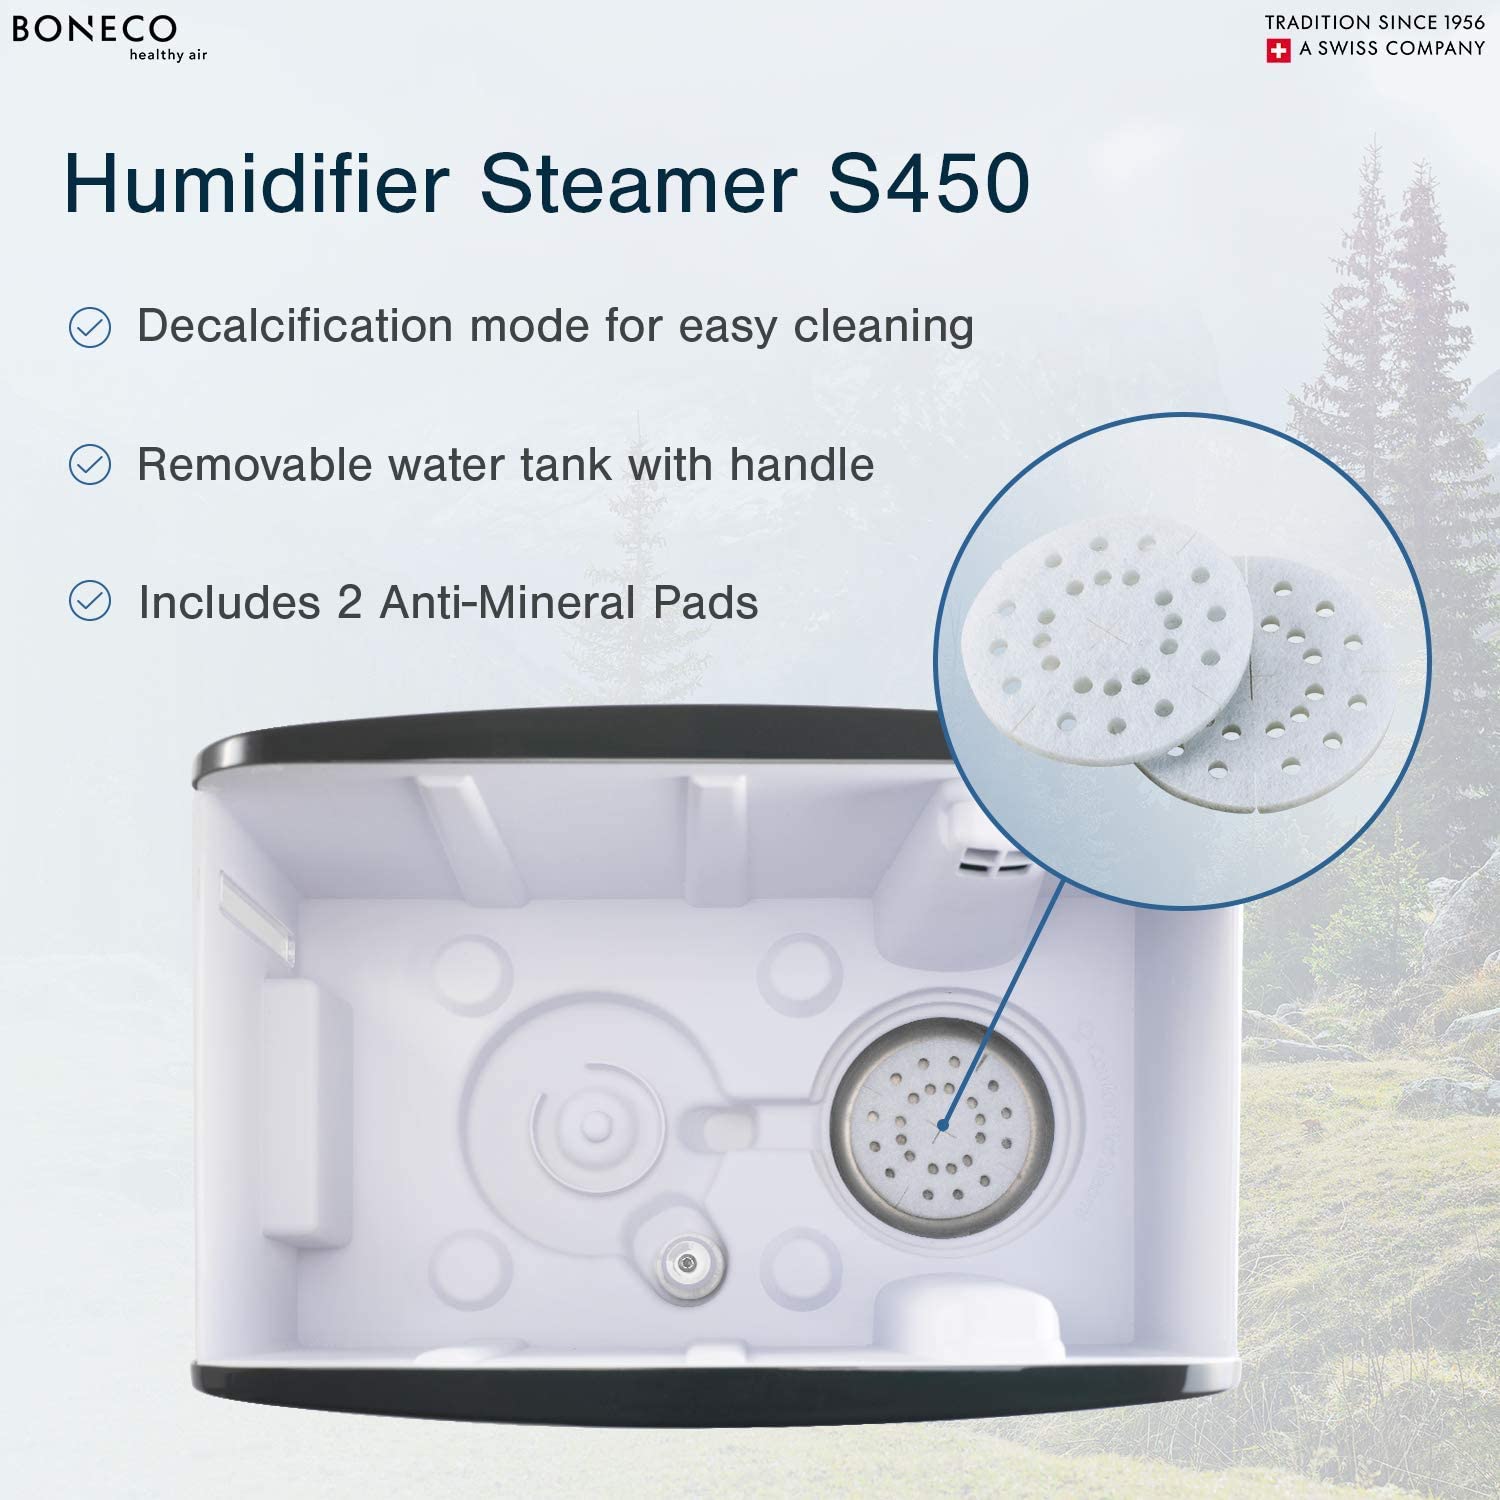 Boneco S450 Humidifier Review